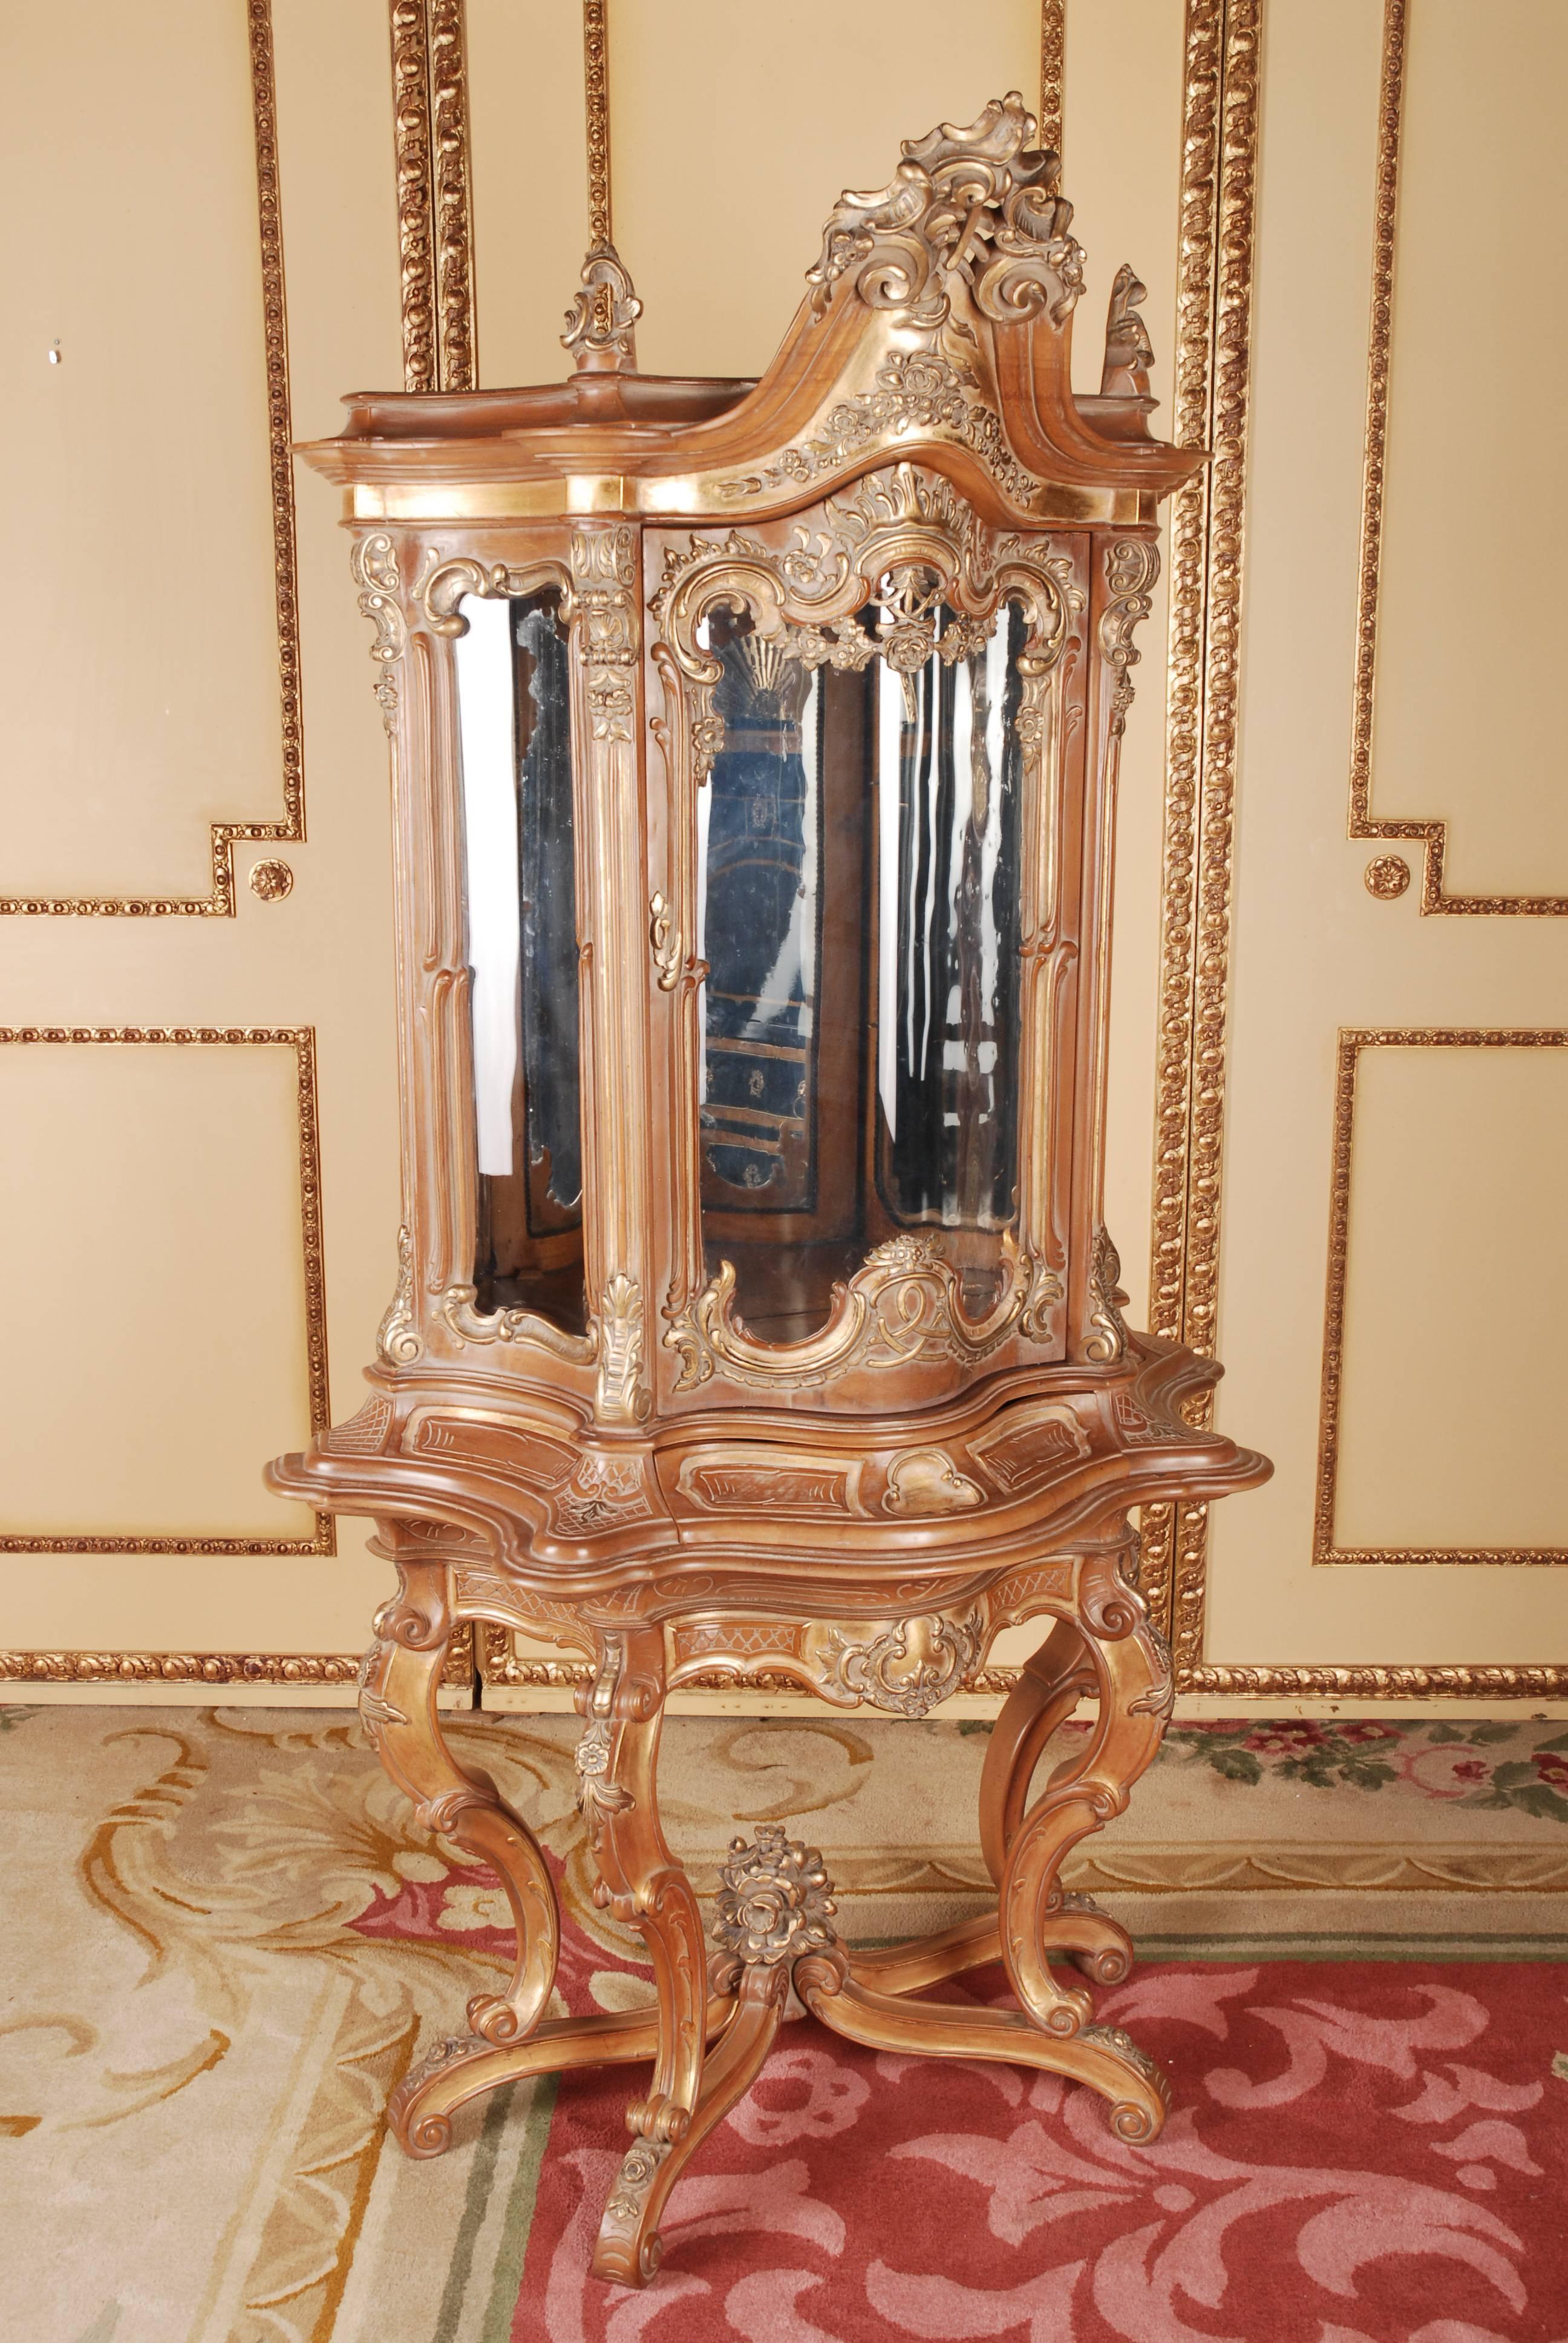 20th Century Splendid Display Cabinet in the Rococo Style (Buchenholz)